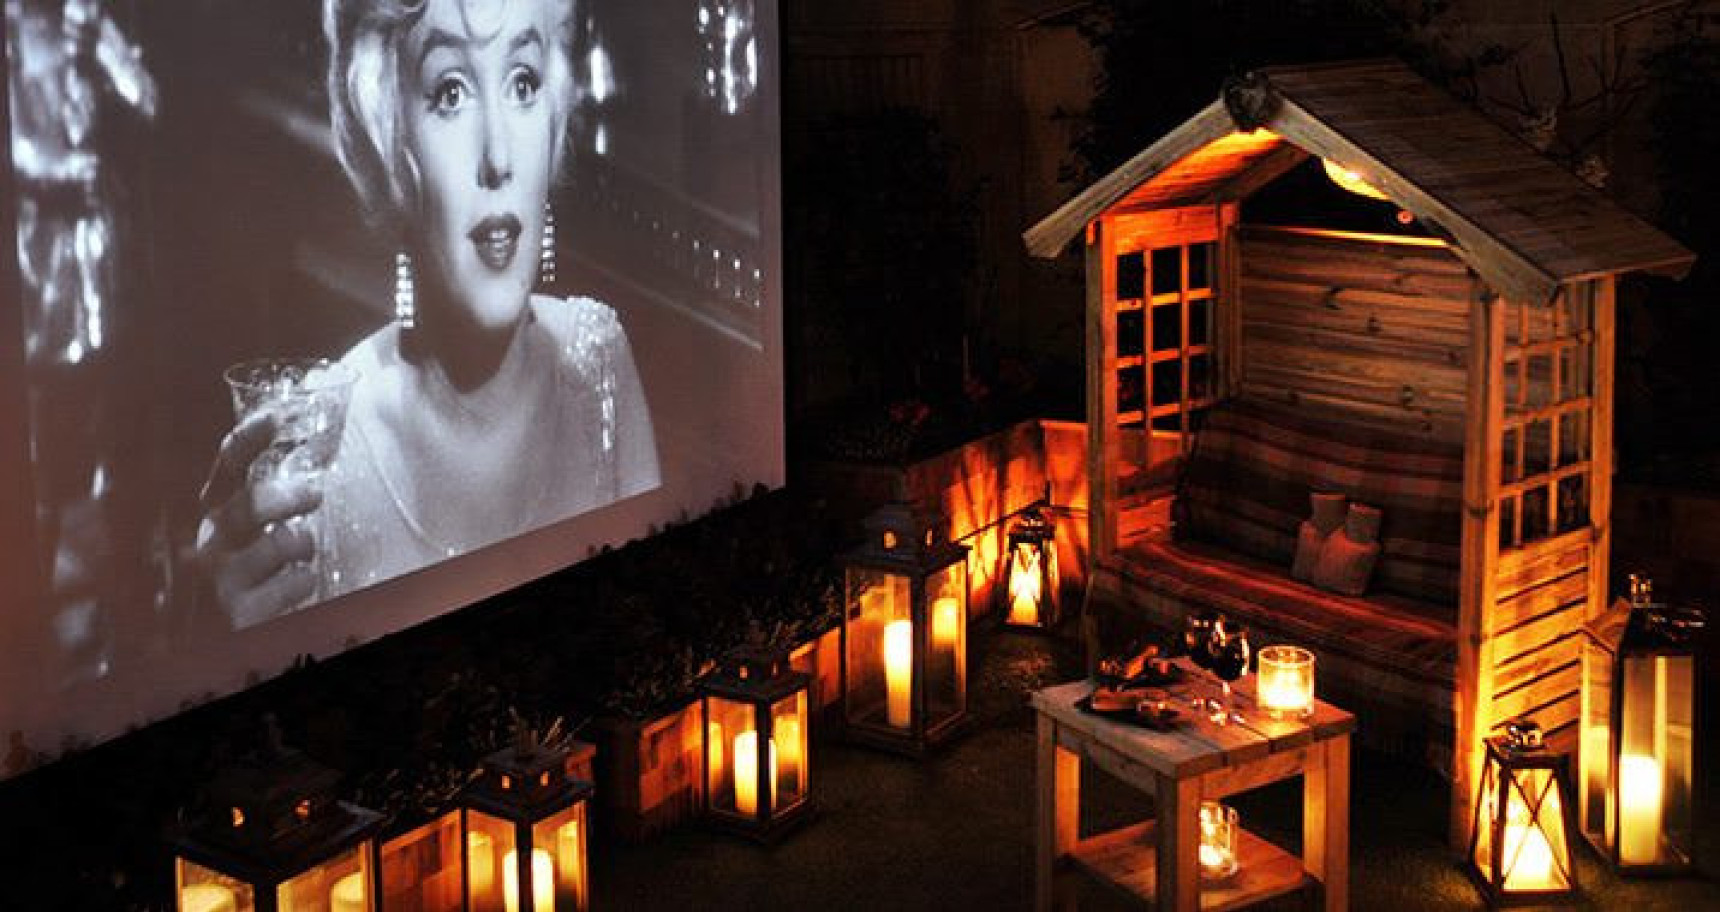 The Berkley - outdoor cinema with candles